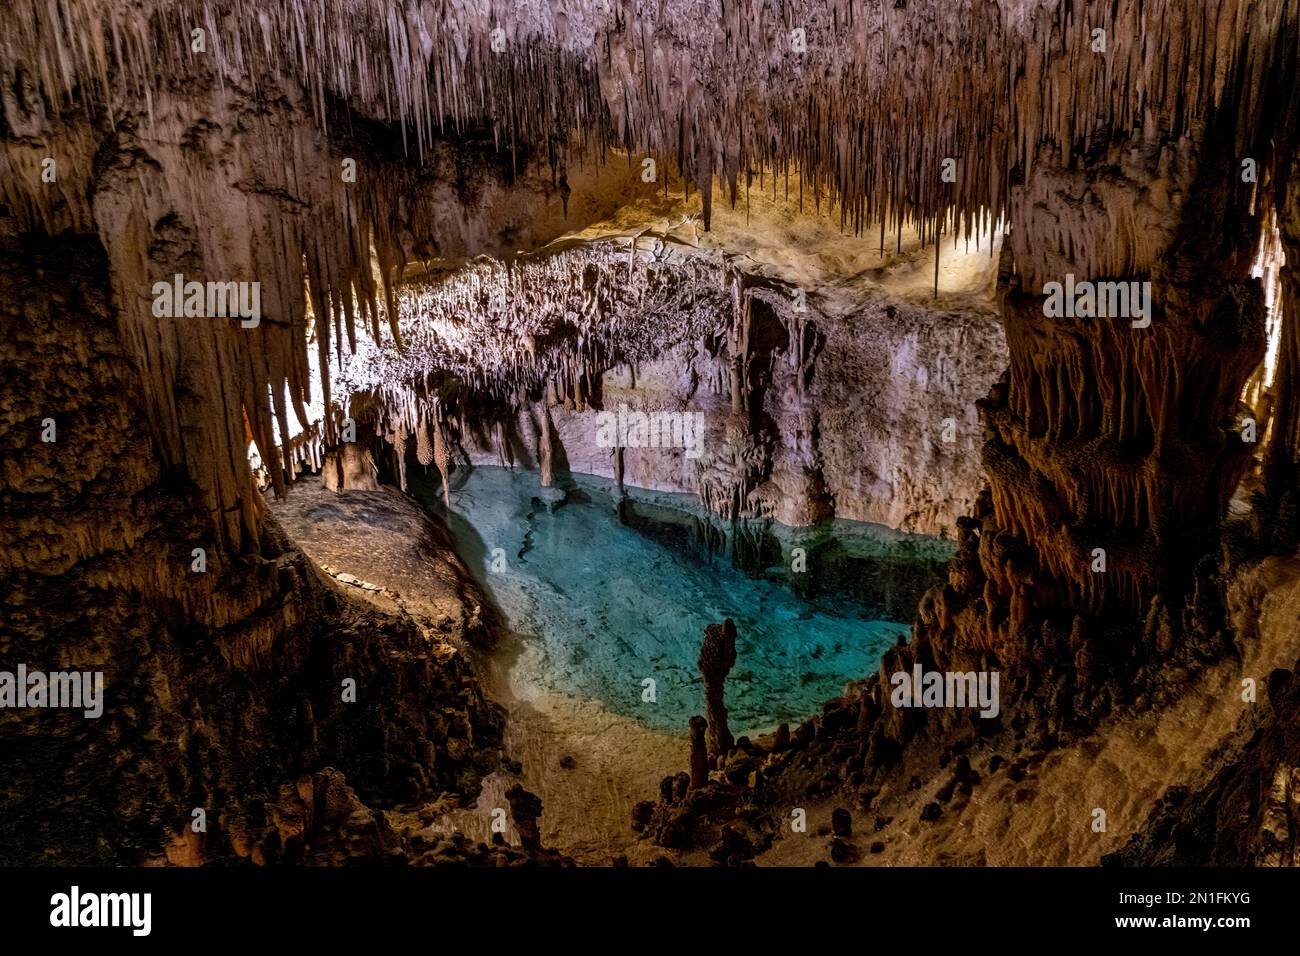 Grottes de Drach, Porto Christo, Majorque, Iles Baléares, Espagne, Méditerranée, Europe Banque D'Images